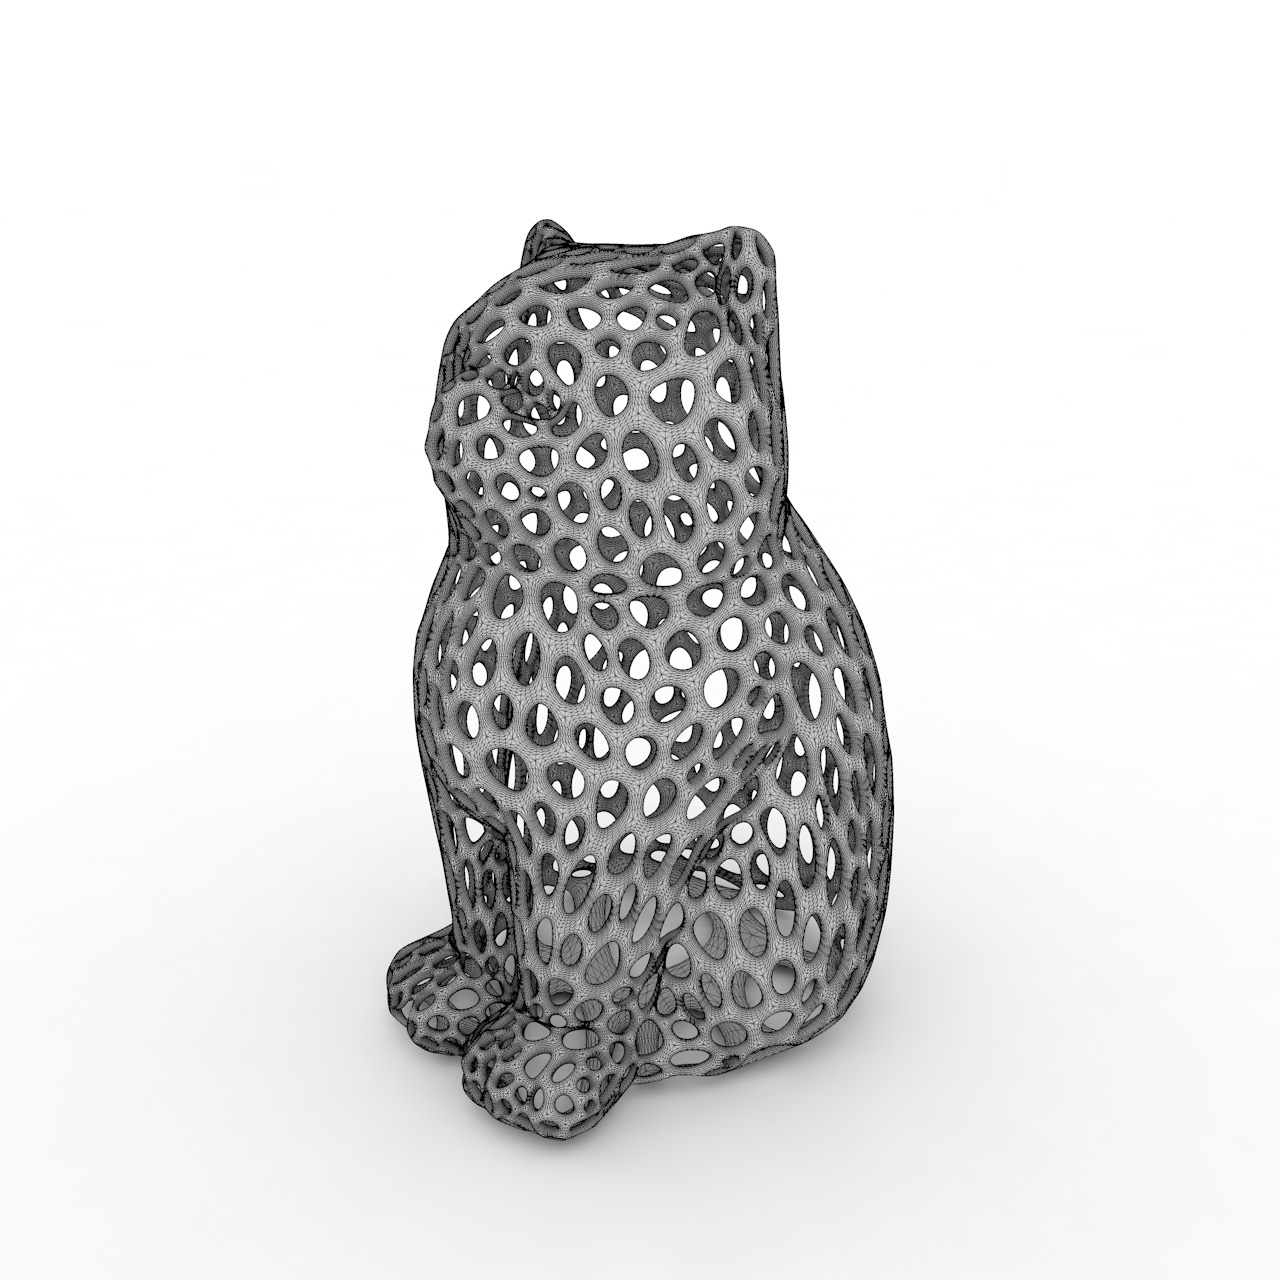 Cat Hollow Voronoi 3d printing model